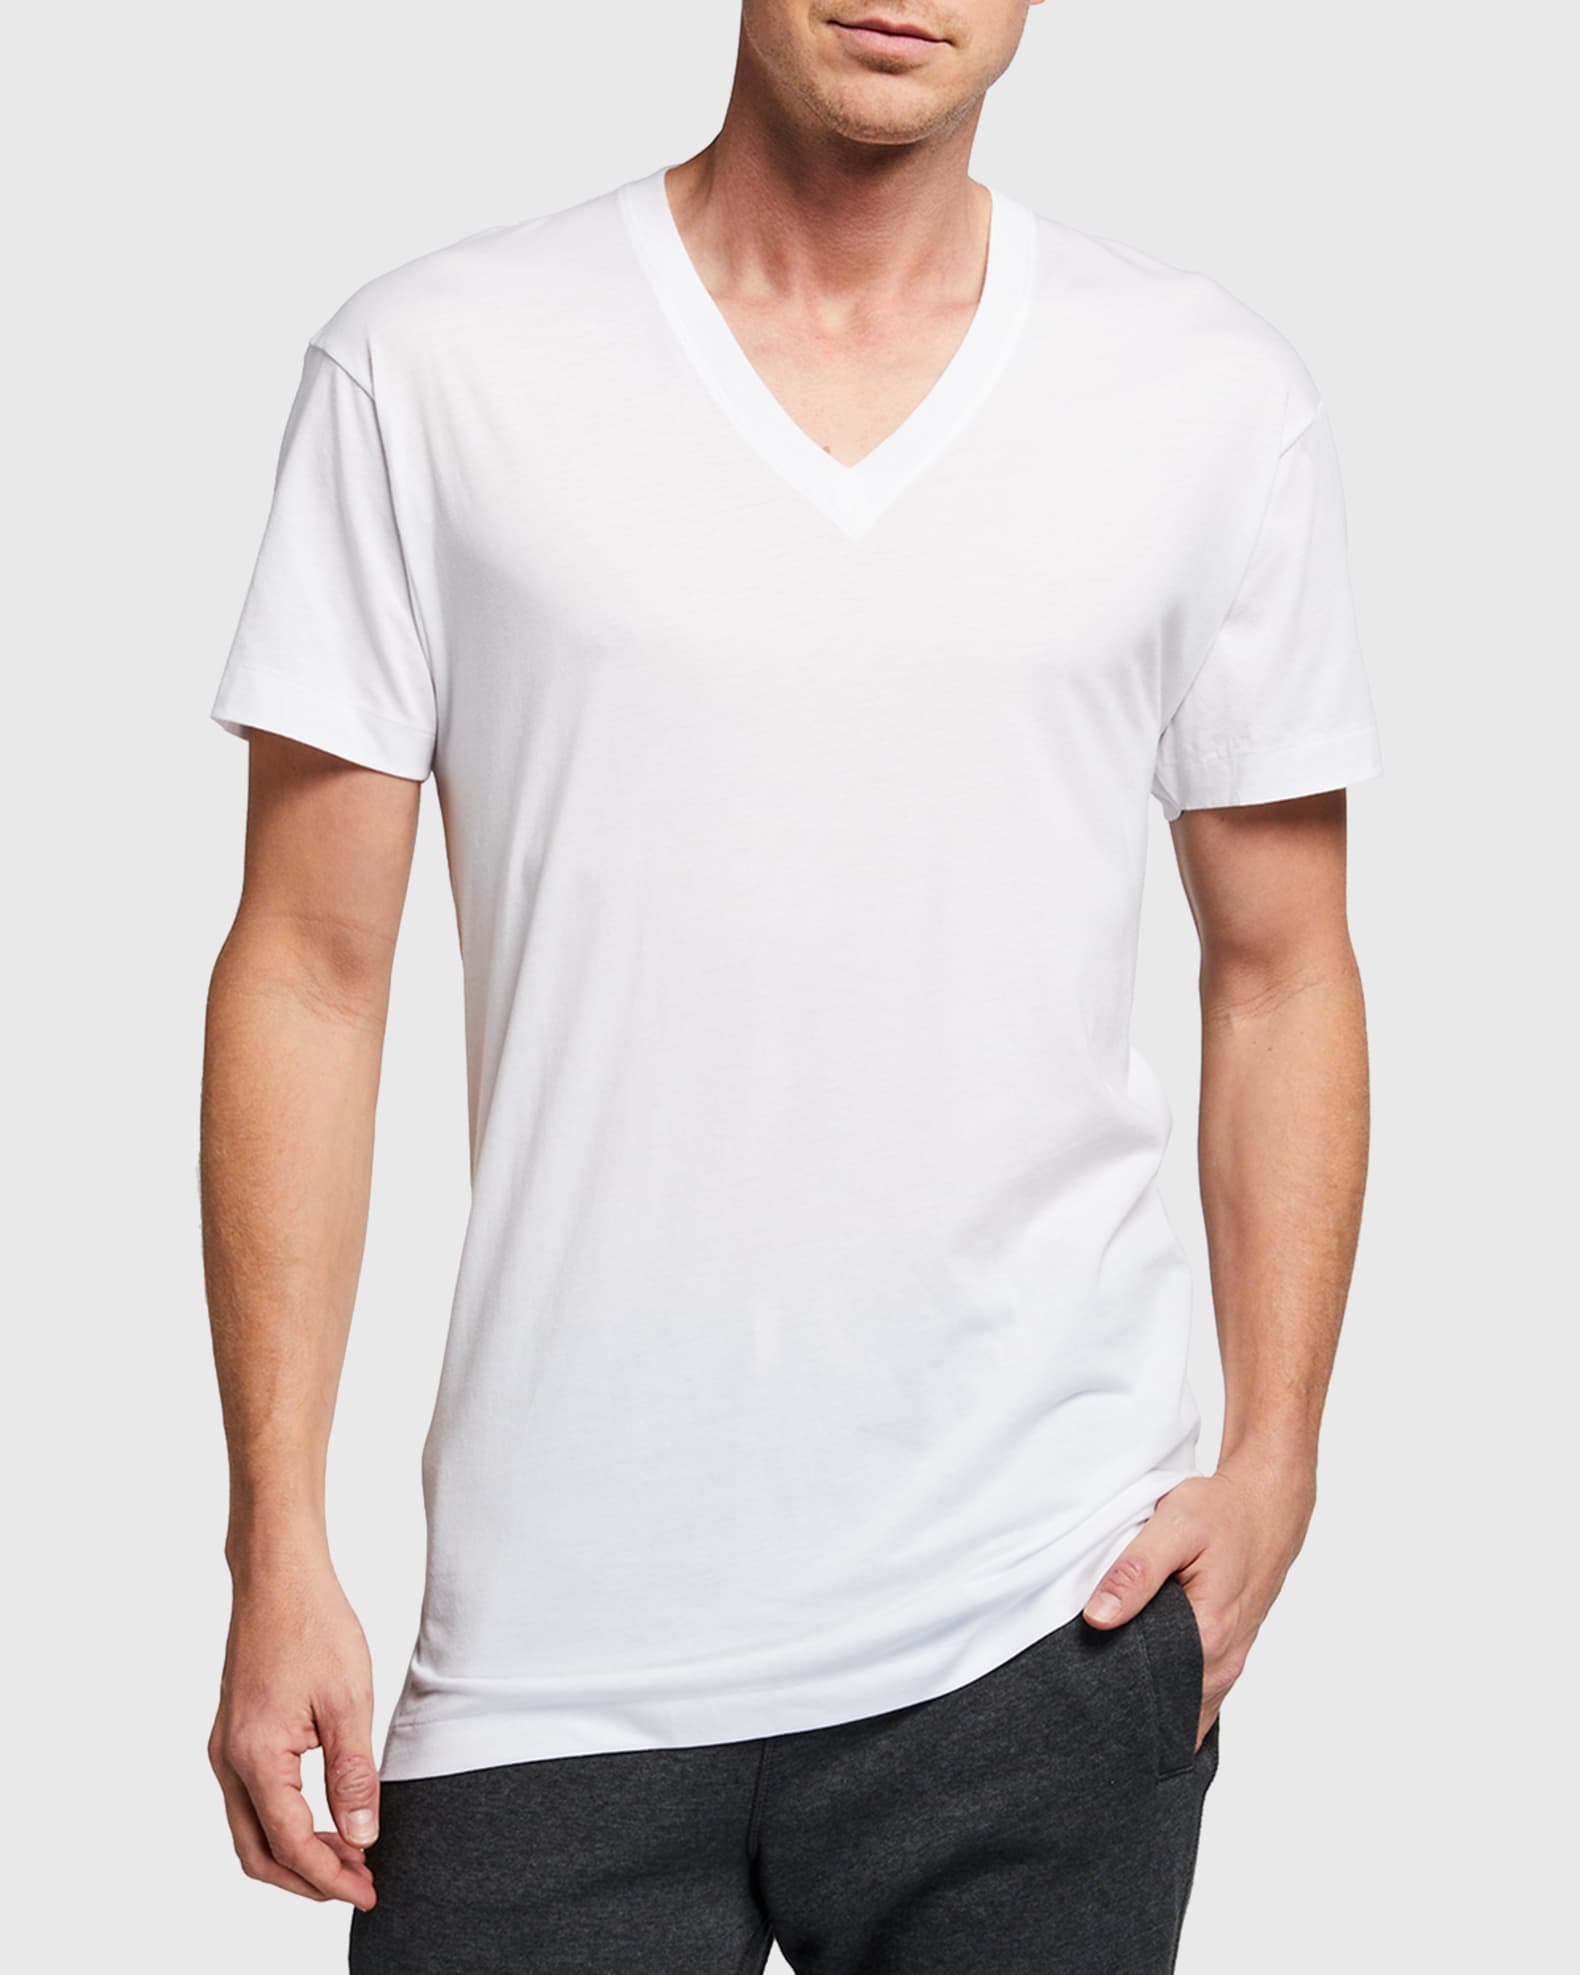 Men's Luxury Underwear T-shirts, Pima Cotton & Micro Modal